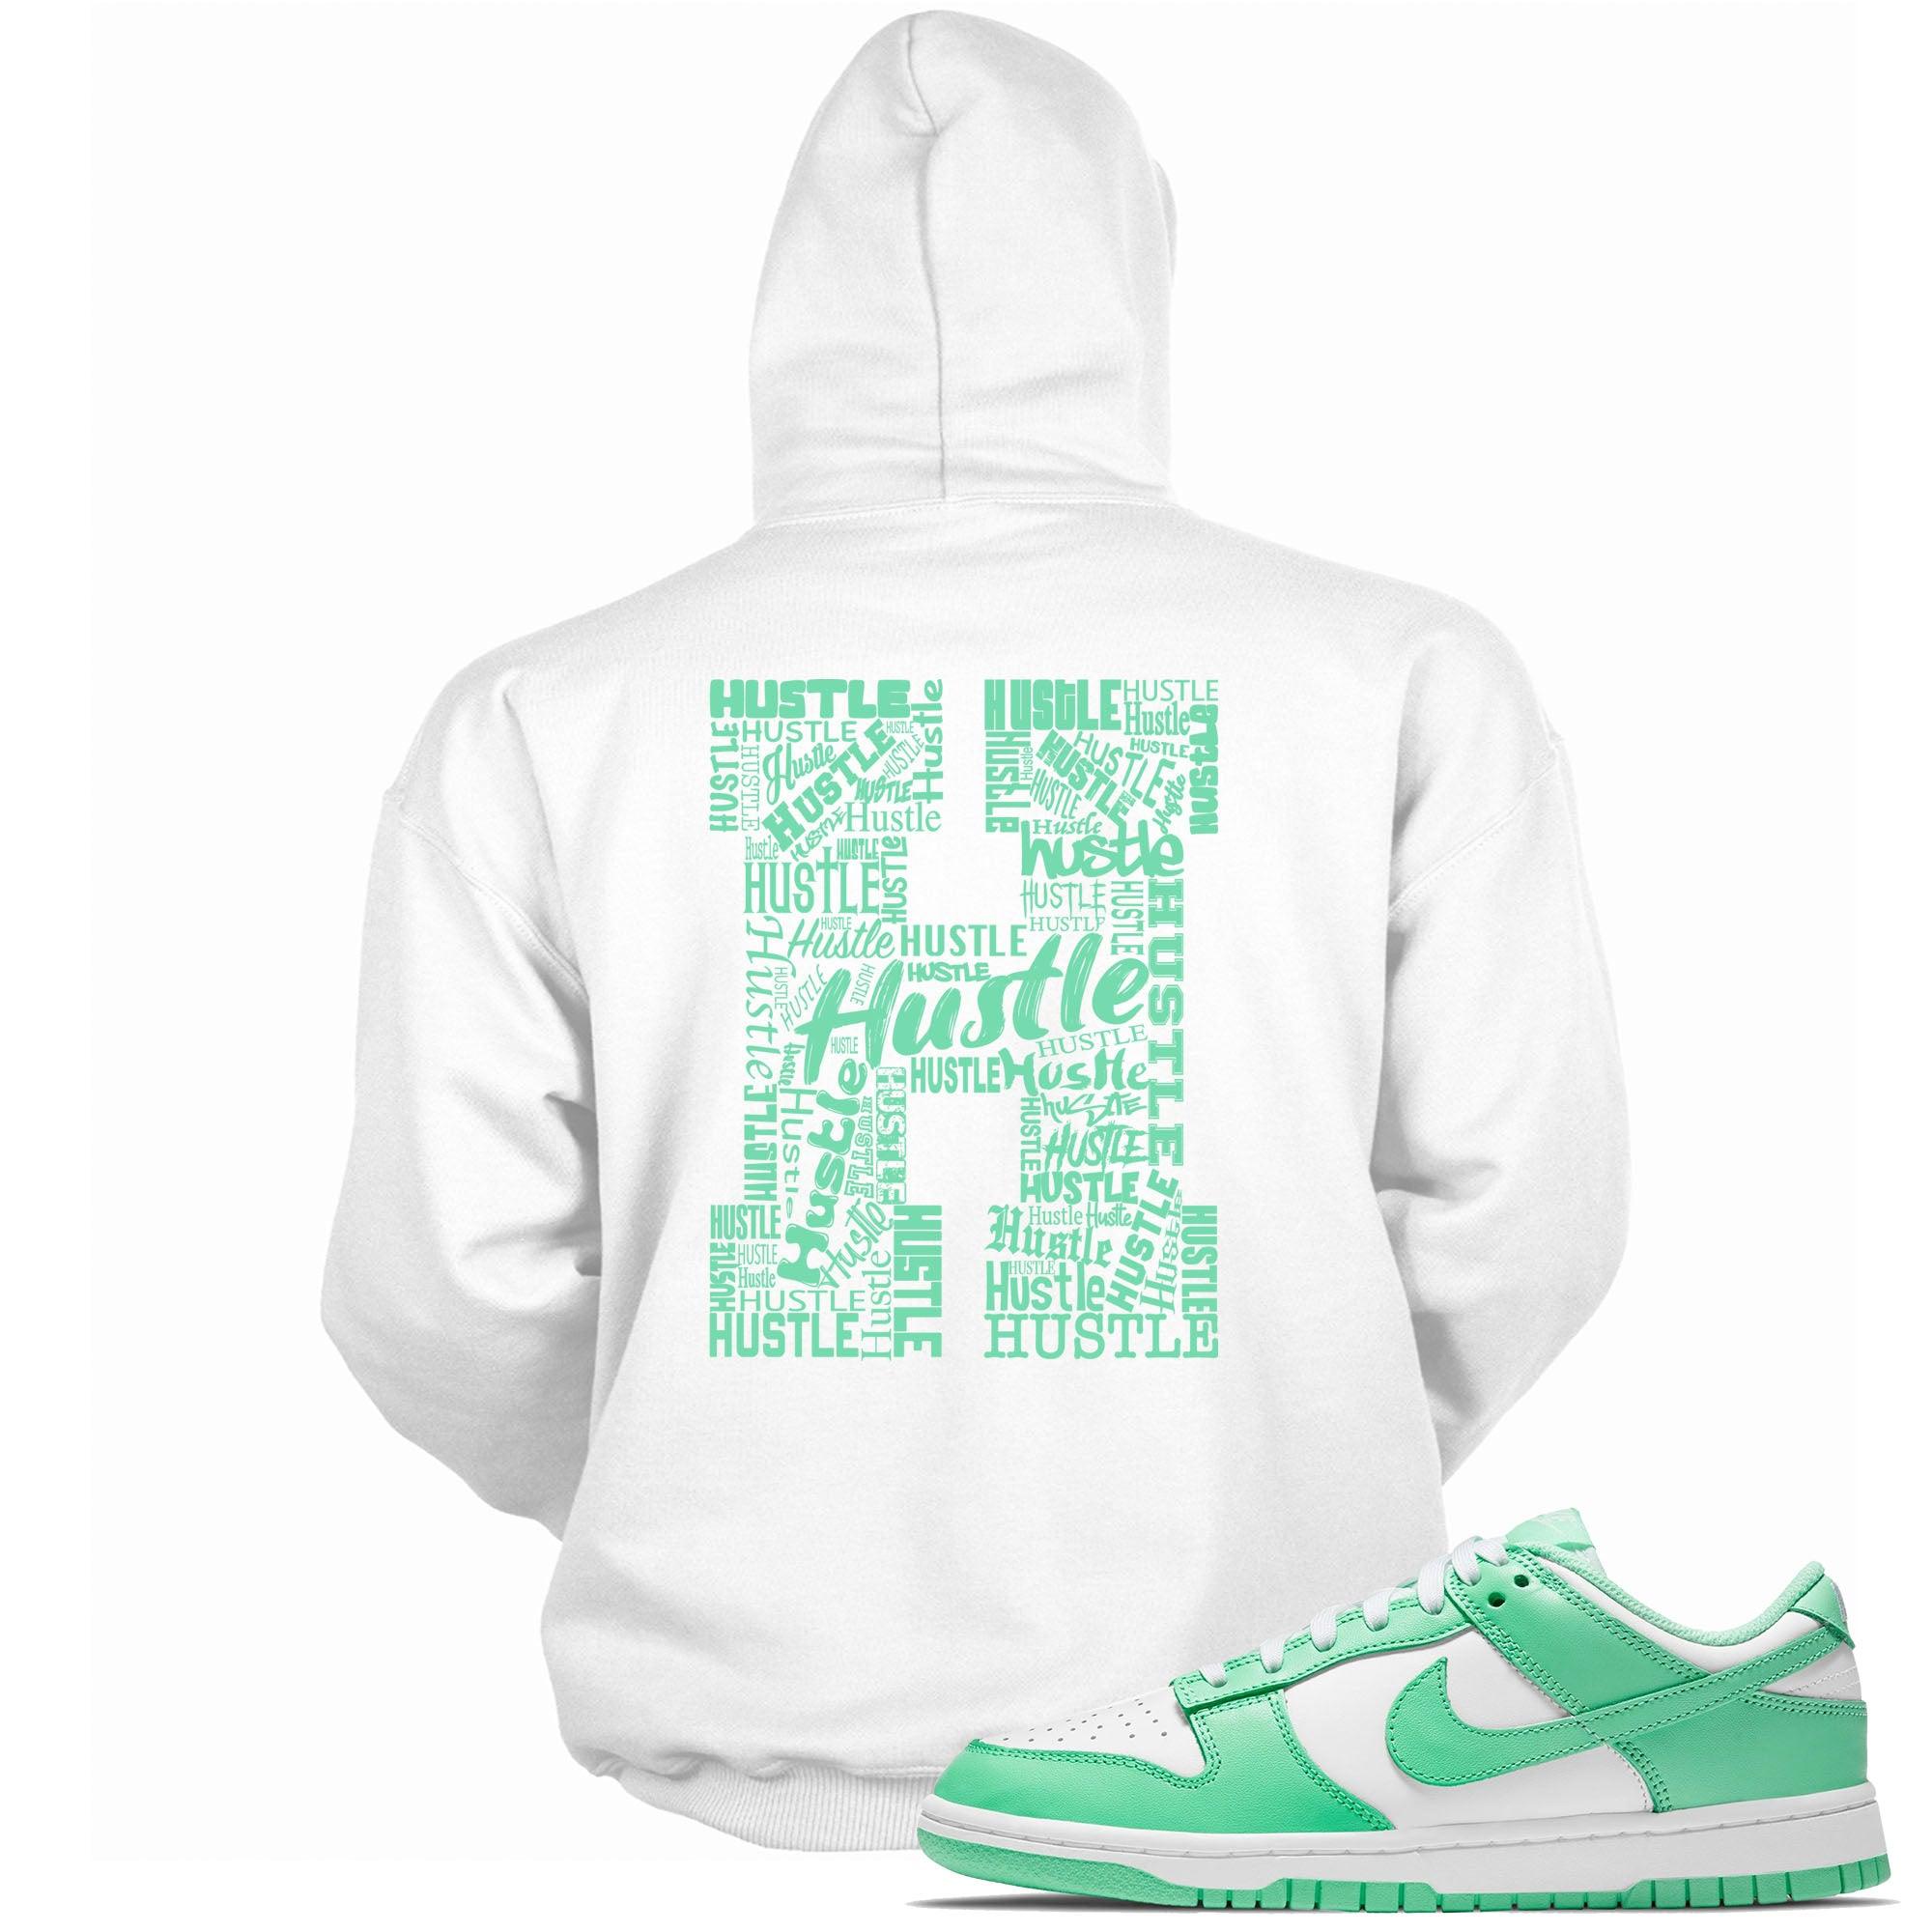 White H For Hustle Hoodie Nike Dunks Low Green Glow photo